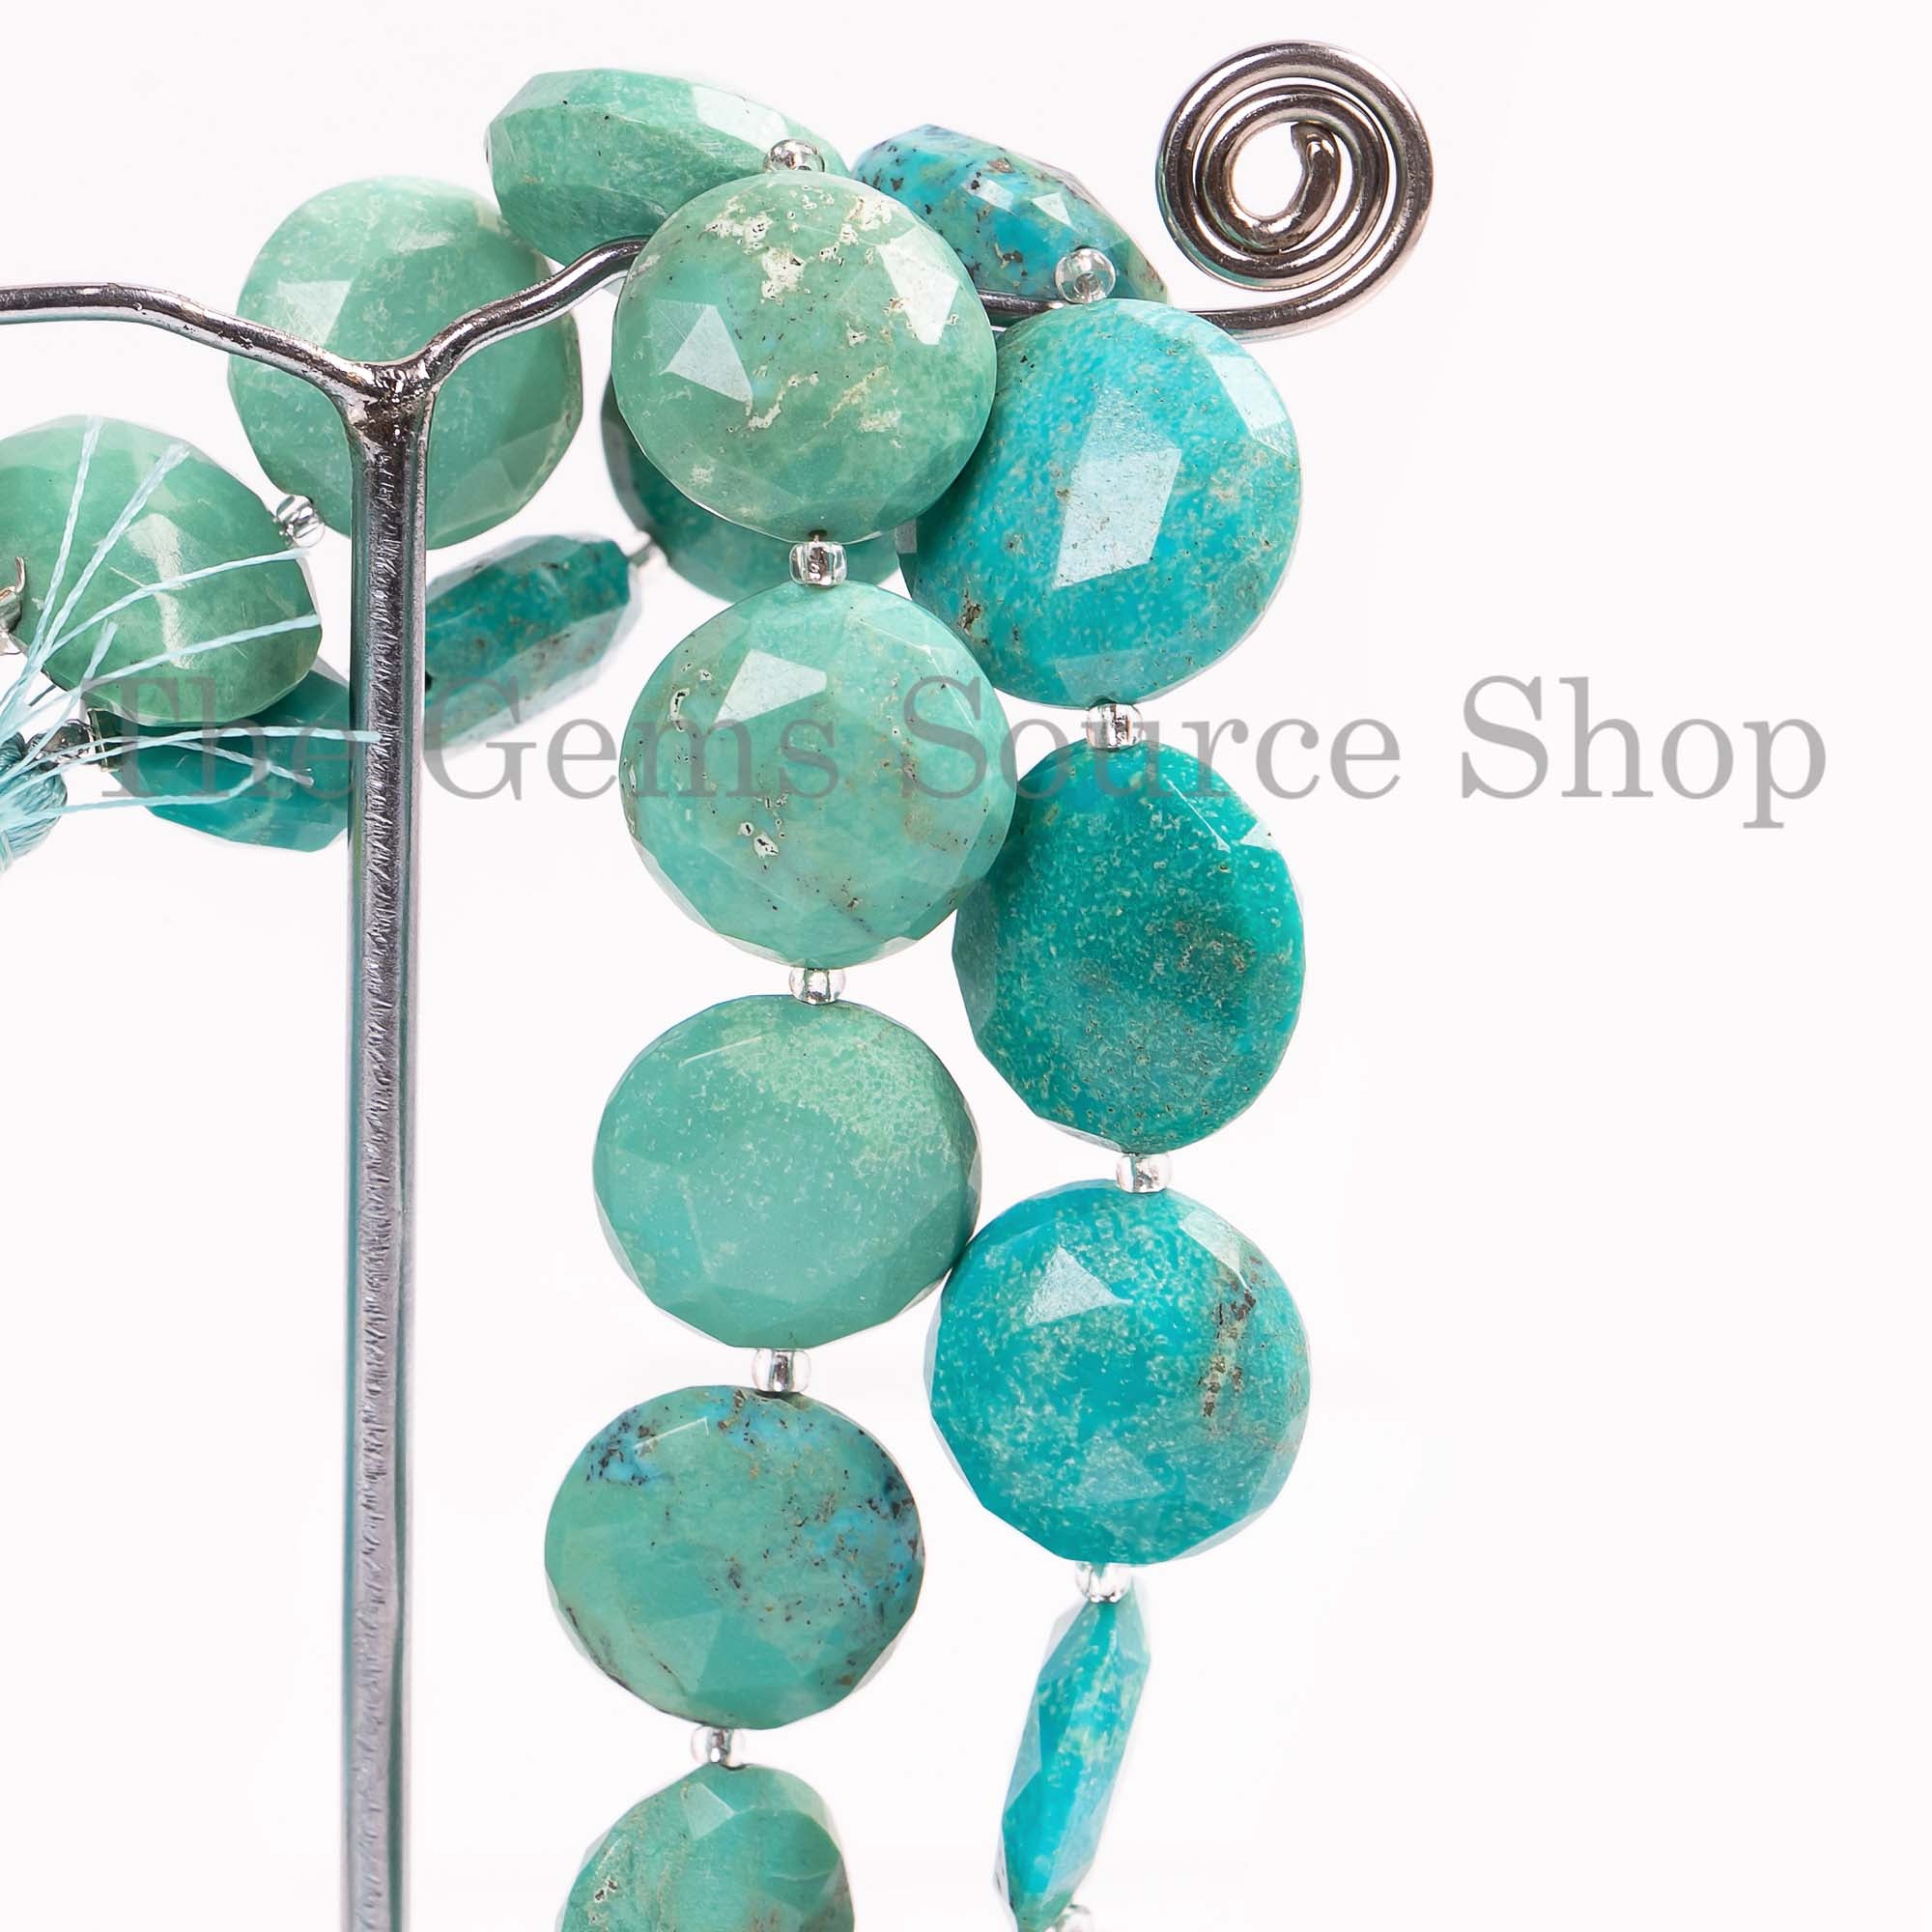 Arizona Turquoise Coin Beads, 11-17mm Turquoise Round Coin Briolettes, Turquoise Faceted Beads, Round Coin Beads, Jewelry Making Beads